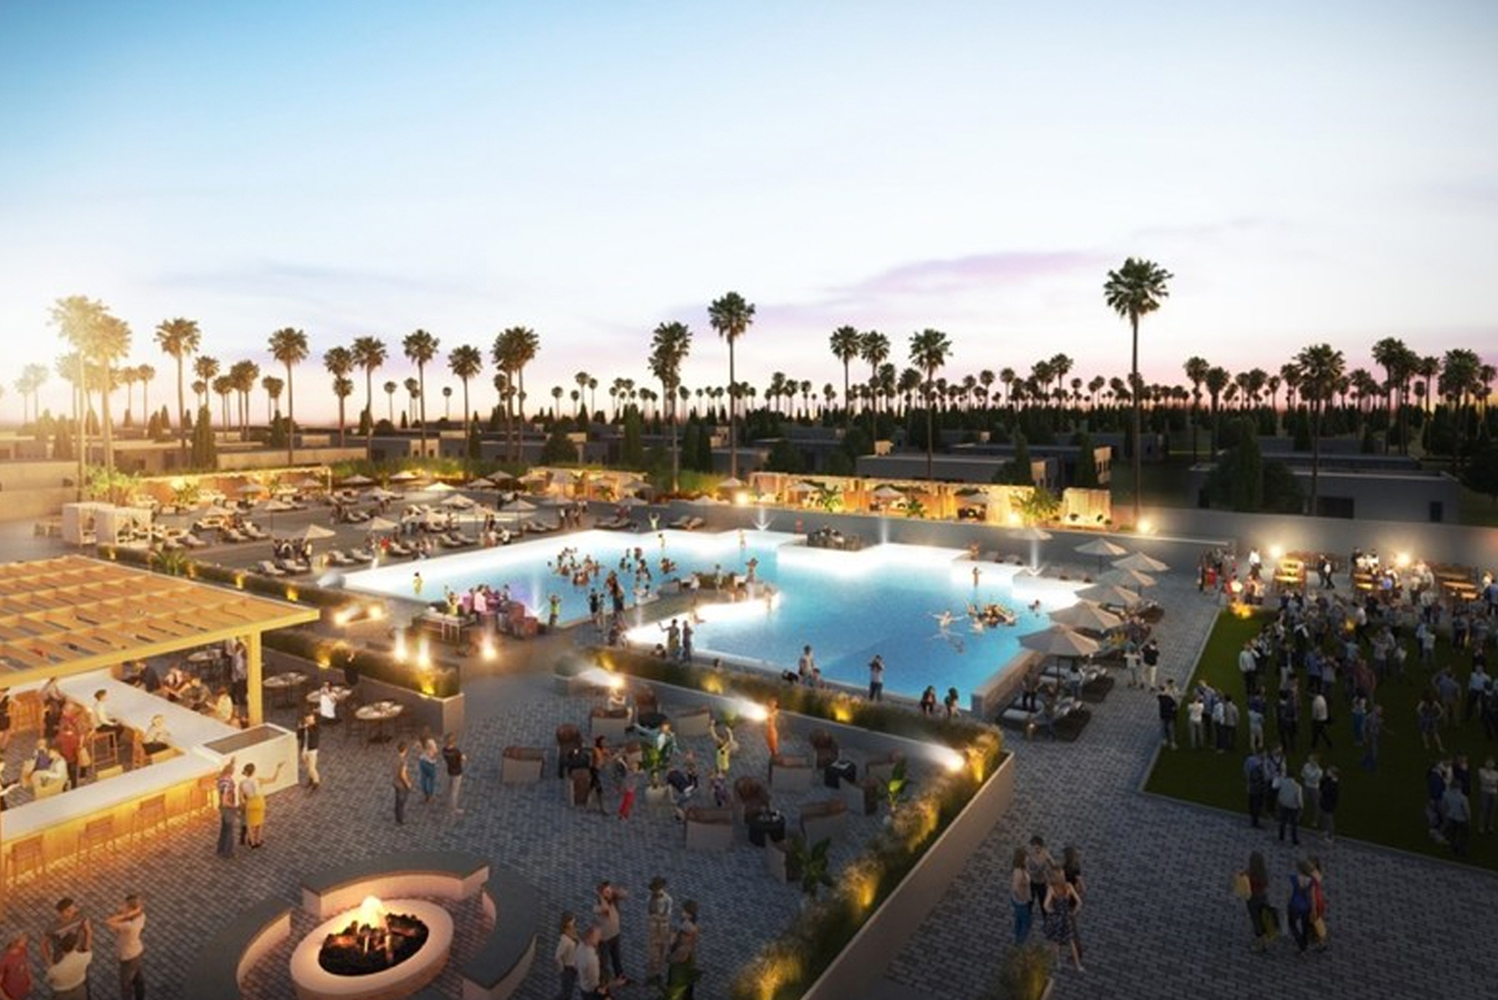 Kristi Hanson Carrier Johnson and Elizabeth Blau design first luxury hotel in Coachella